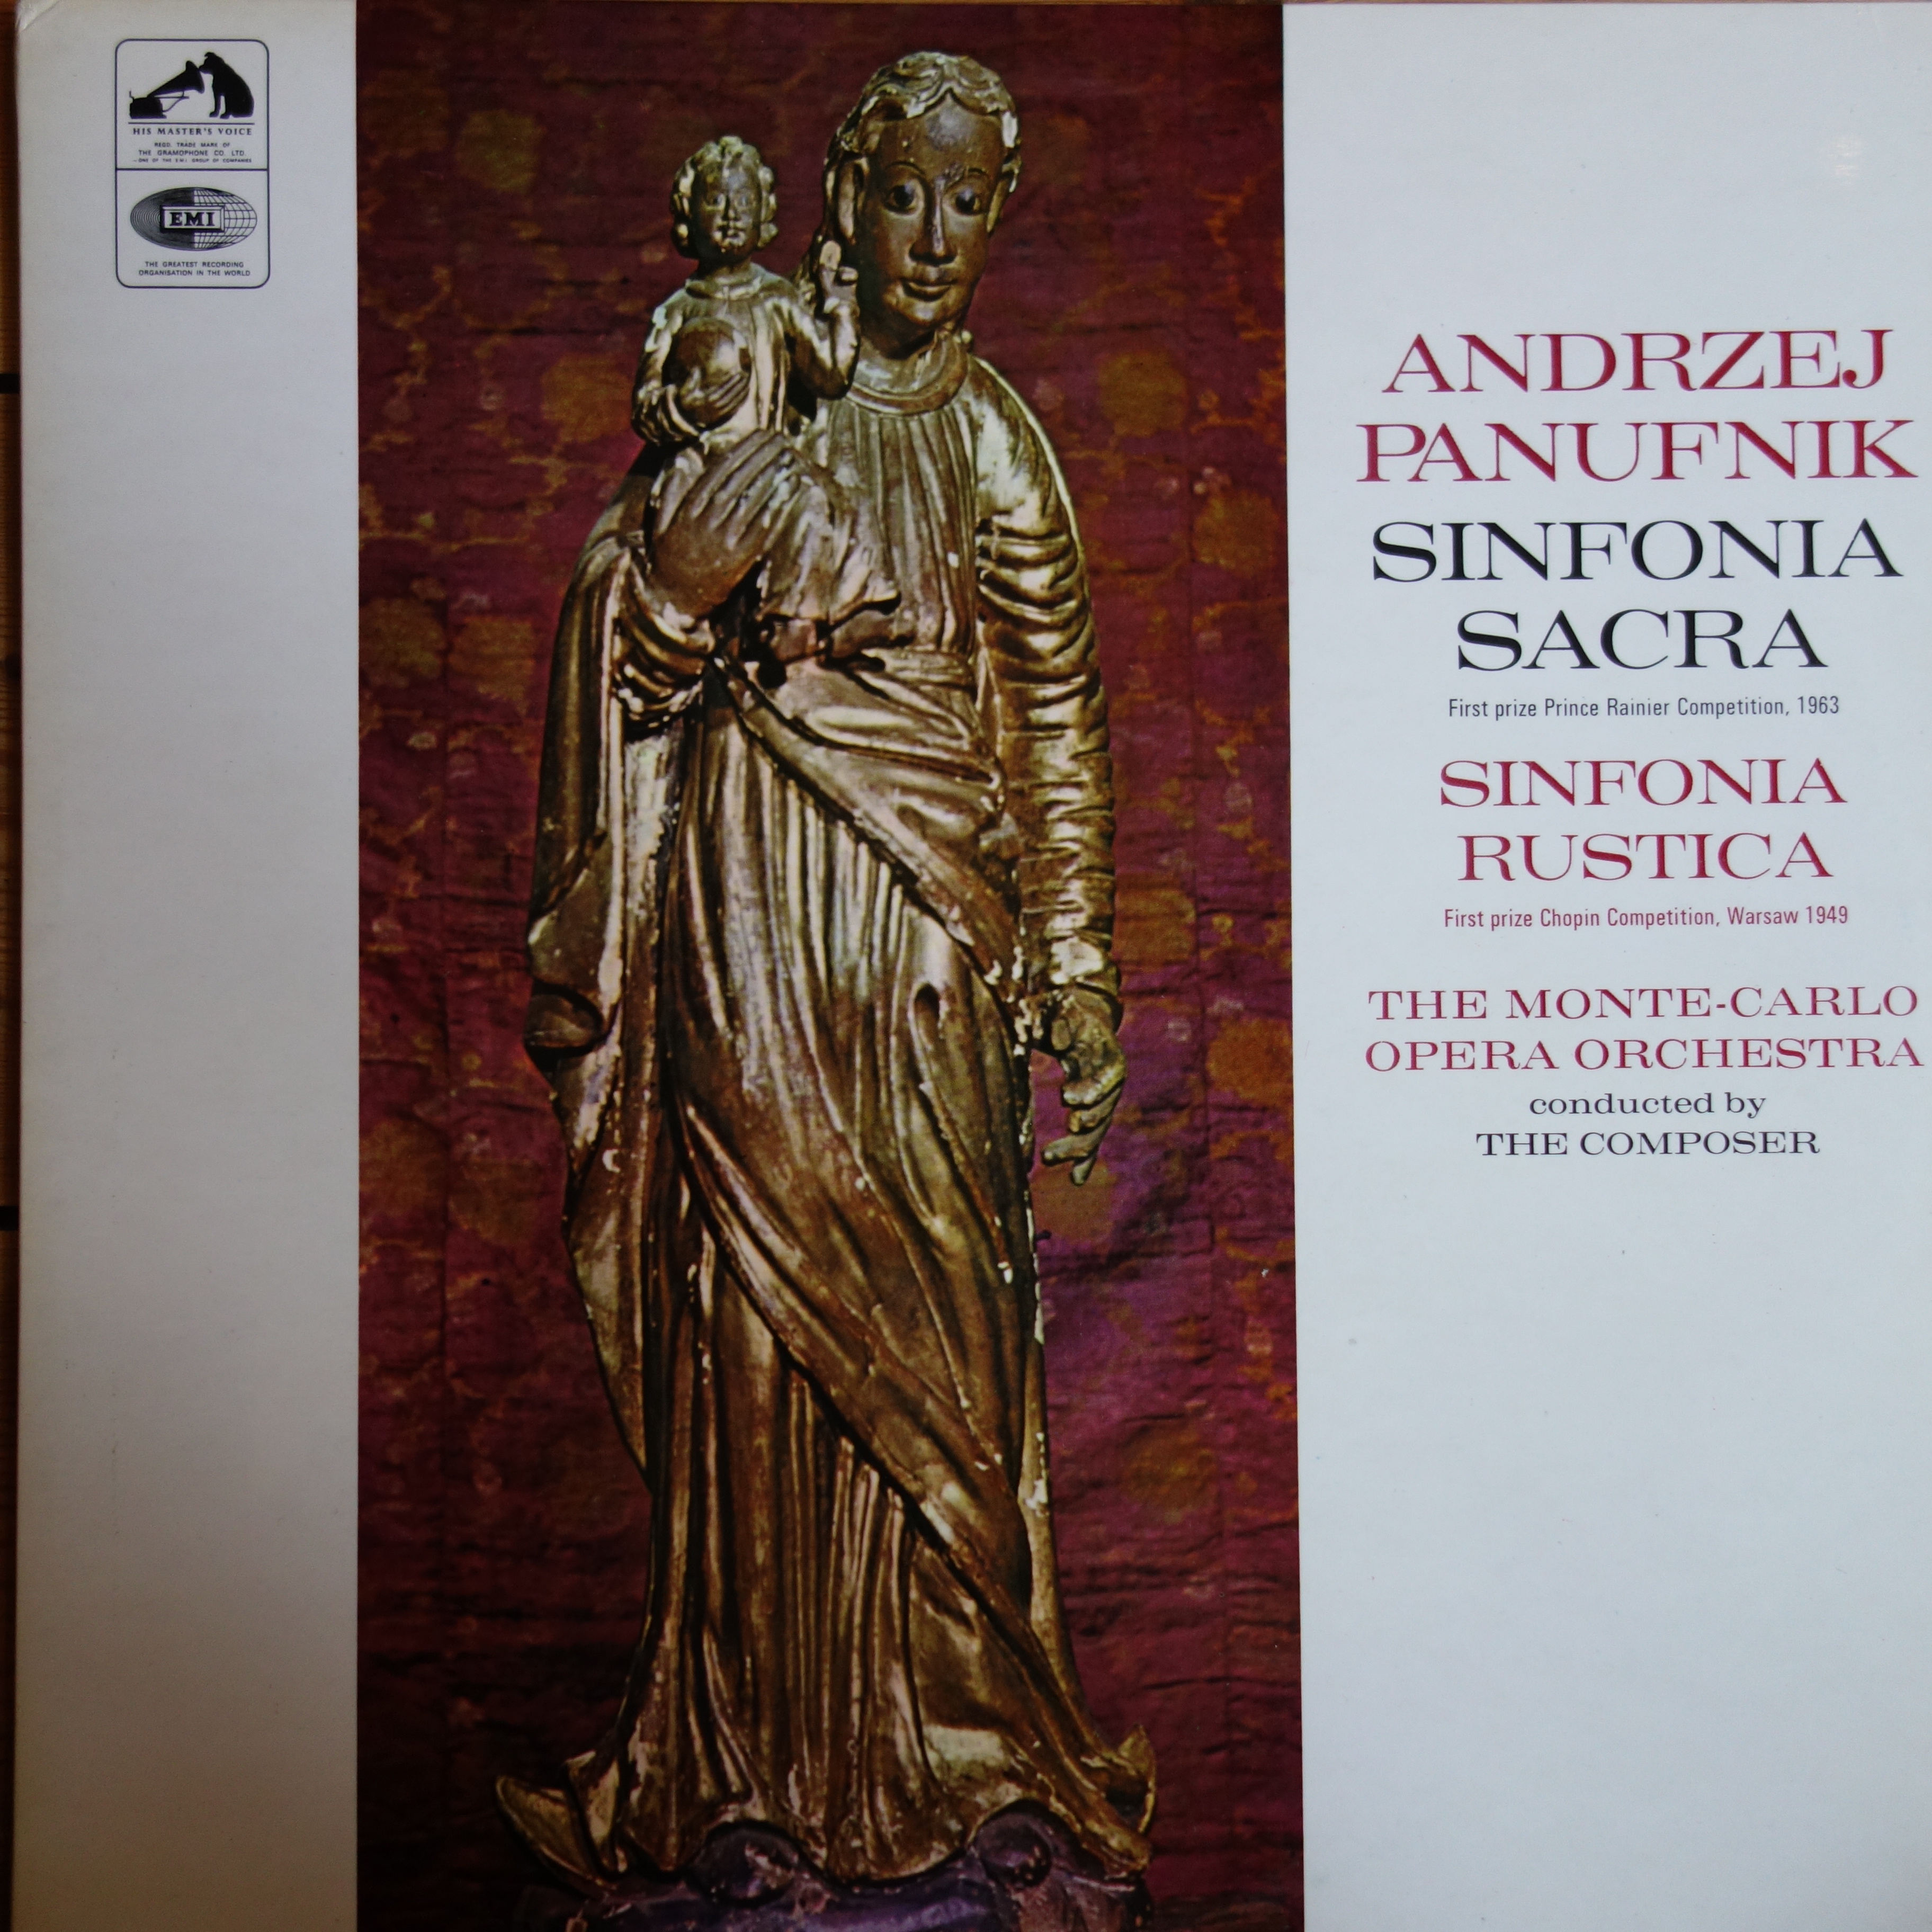 ASD 2298 Panufnik Sinfonia Sacra, Sinfonia Rustica / Monte Carlo Opera